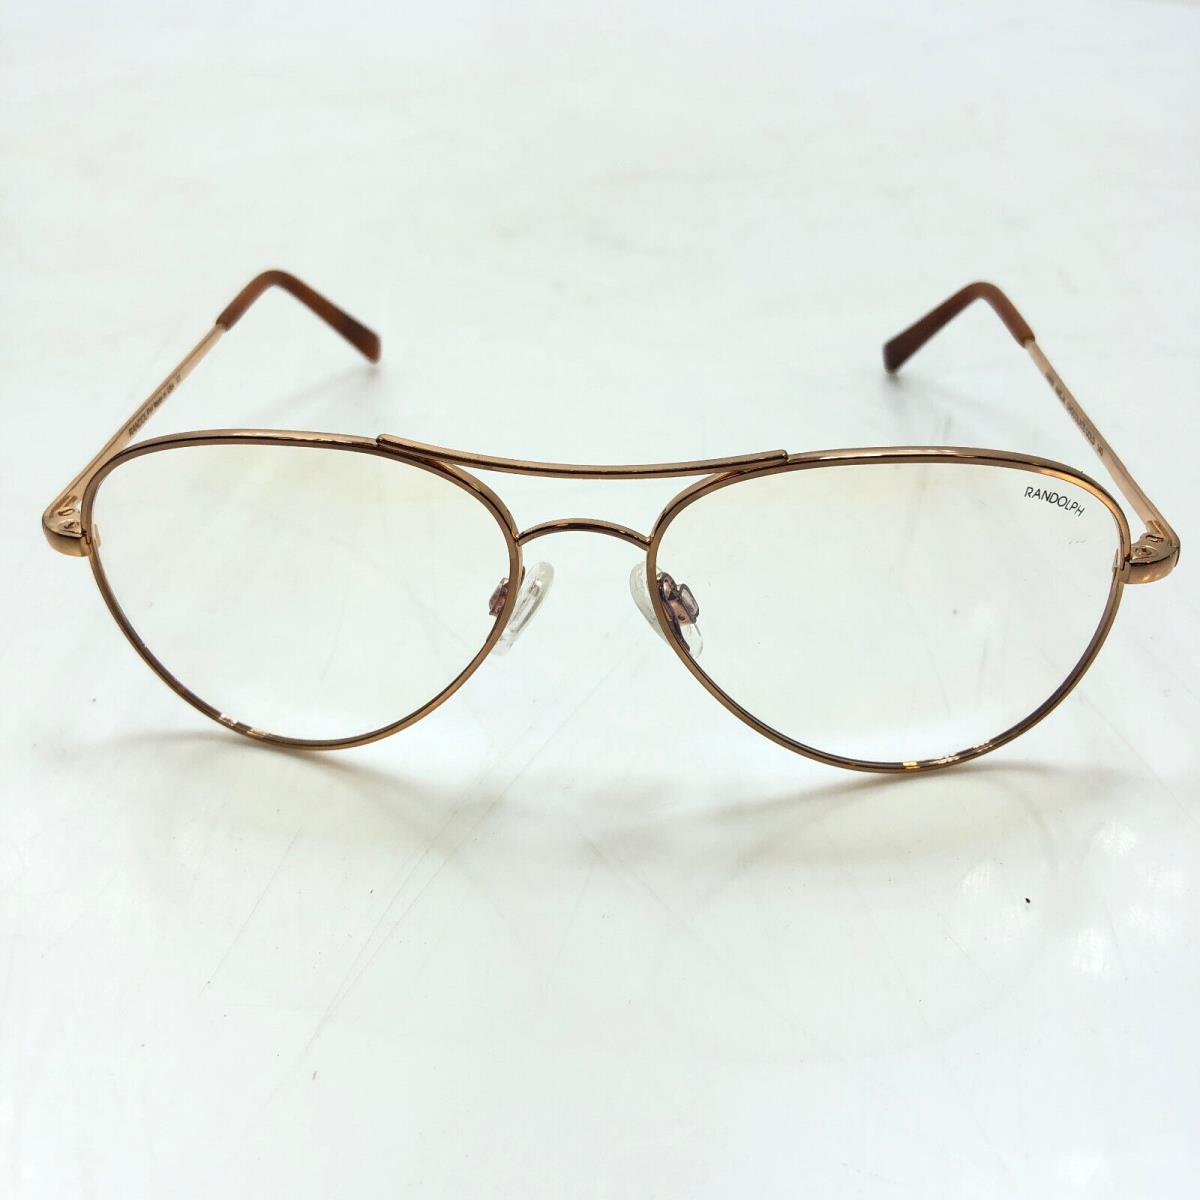 Randolph Amelia AA008 Chocolate Gold Aviator Prescription Eyeglasses Frames Case